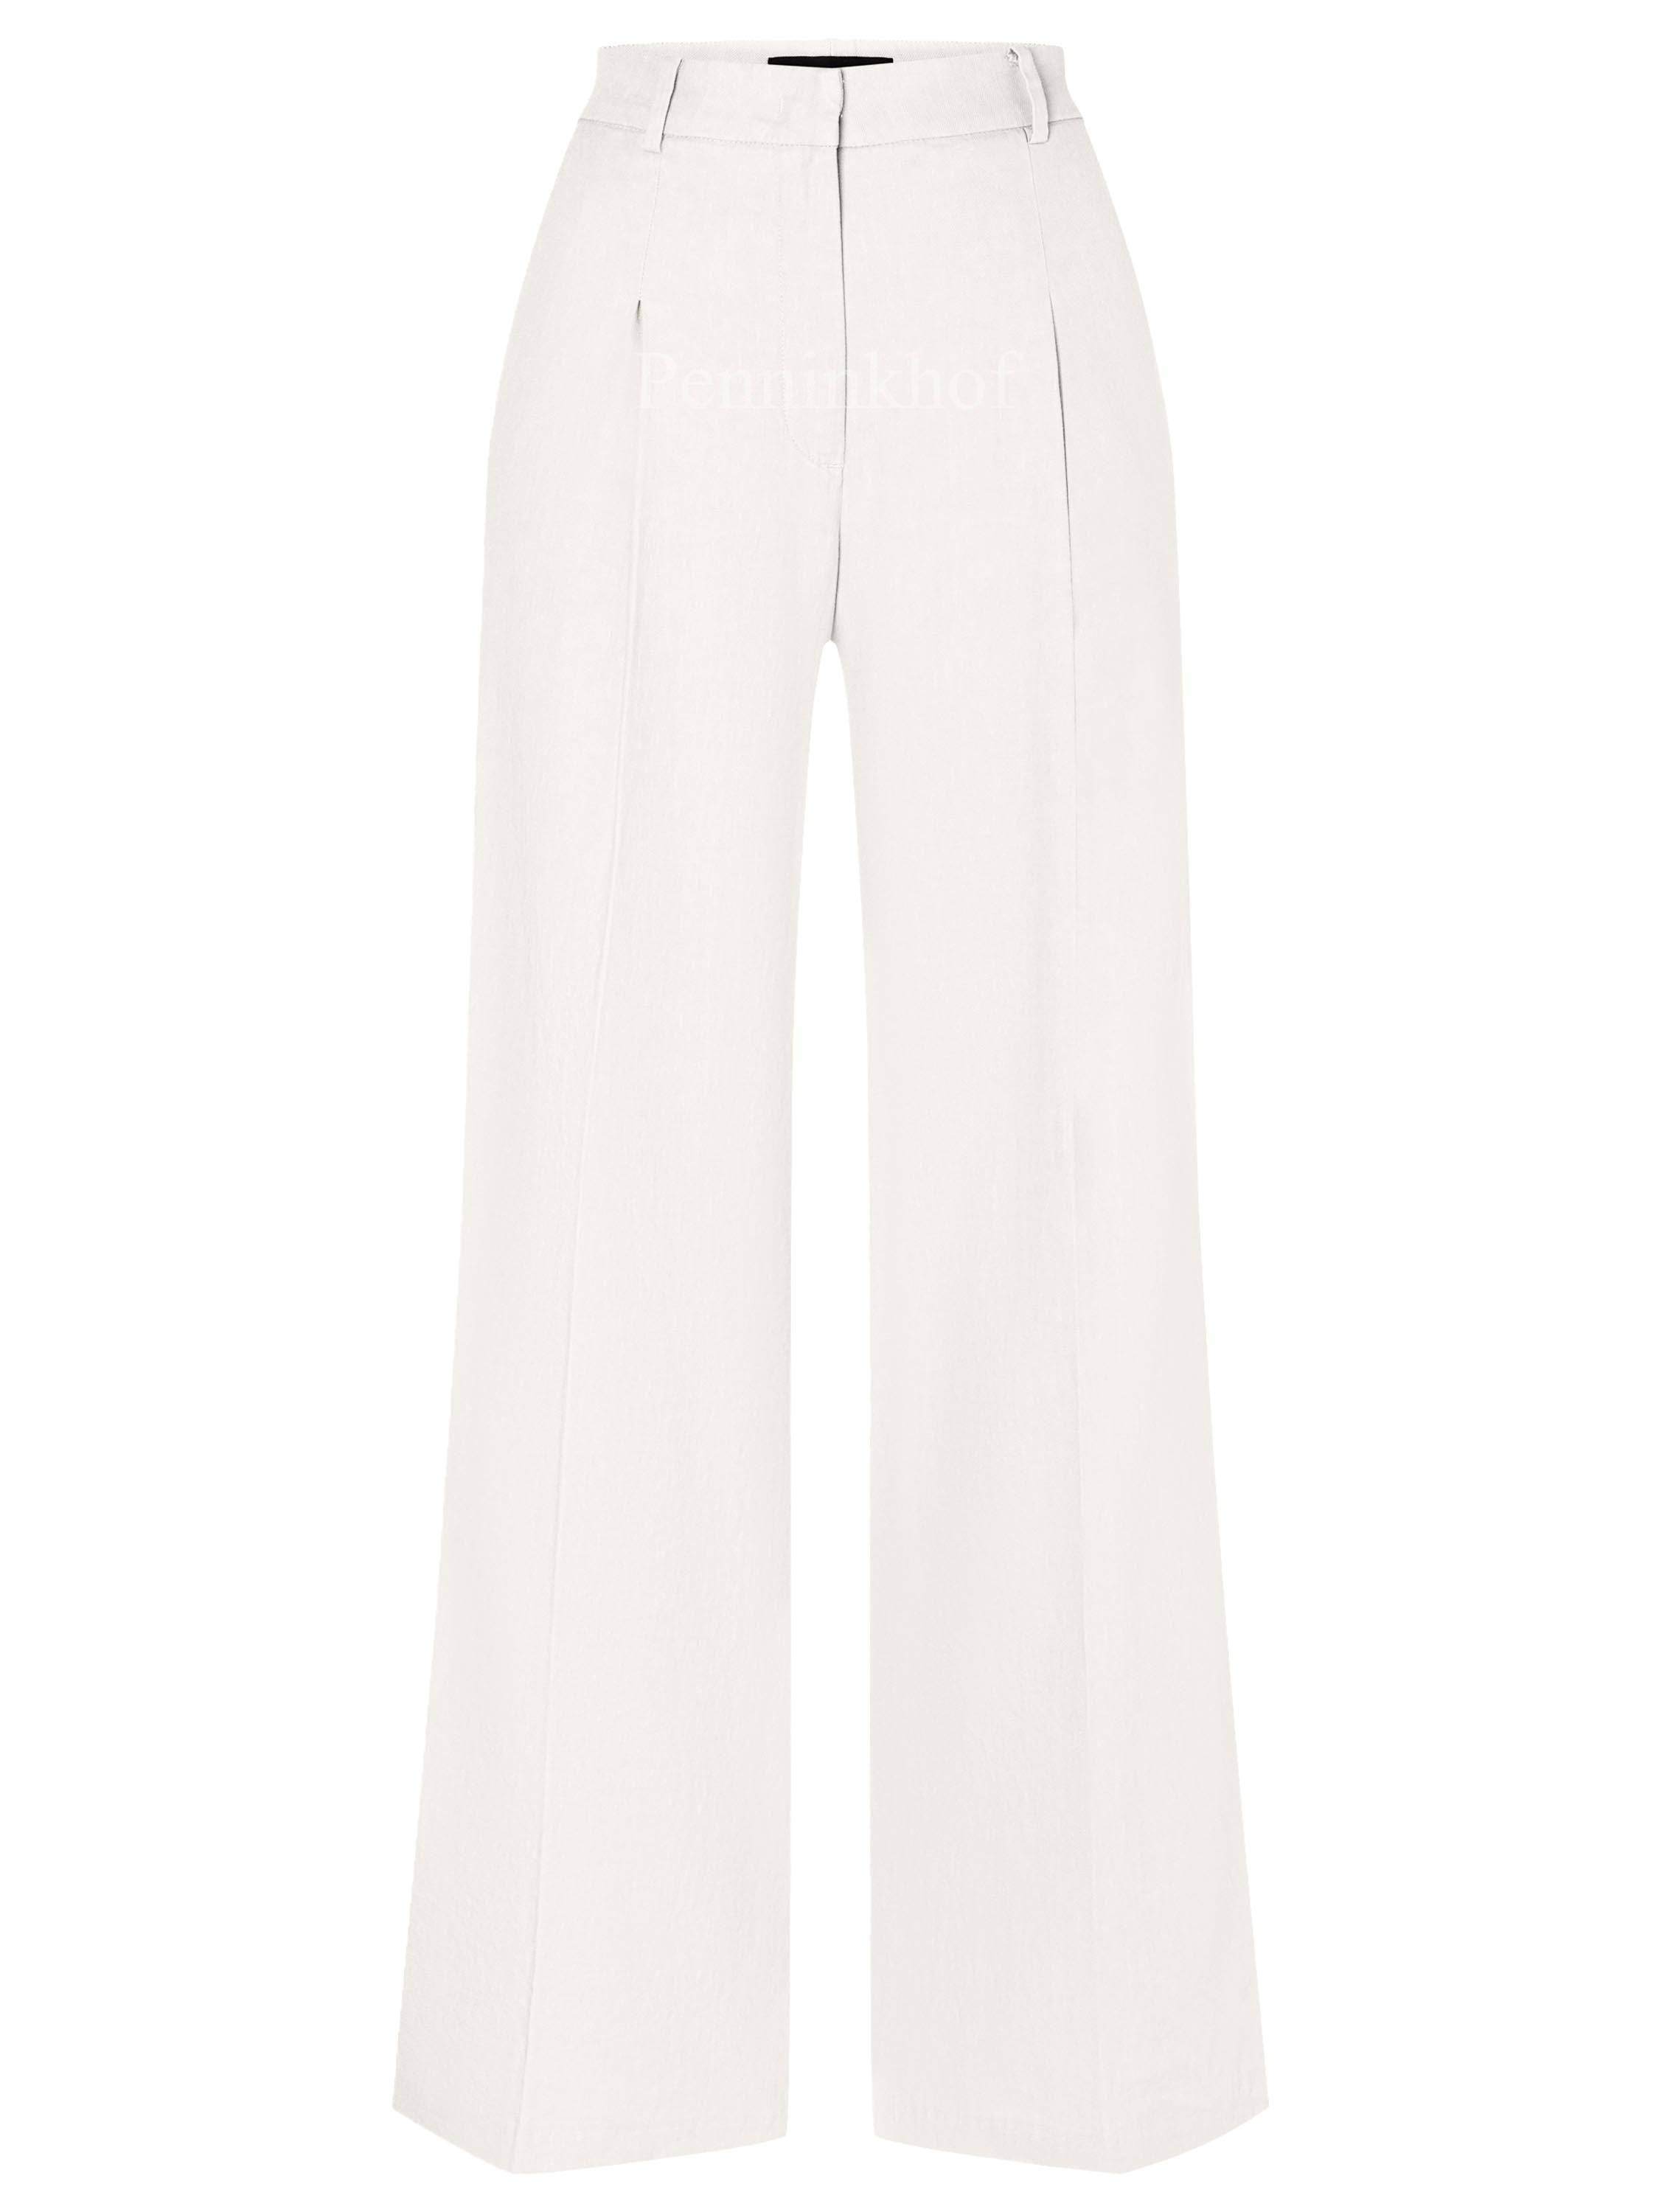 Cambio trousers MIRA 8003 0299-00 White by Penninkhoffashion.com